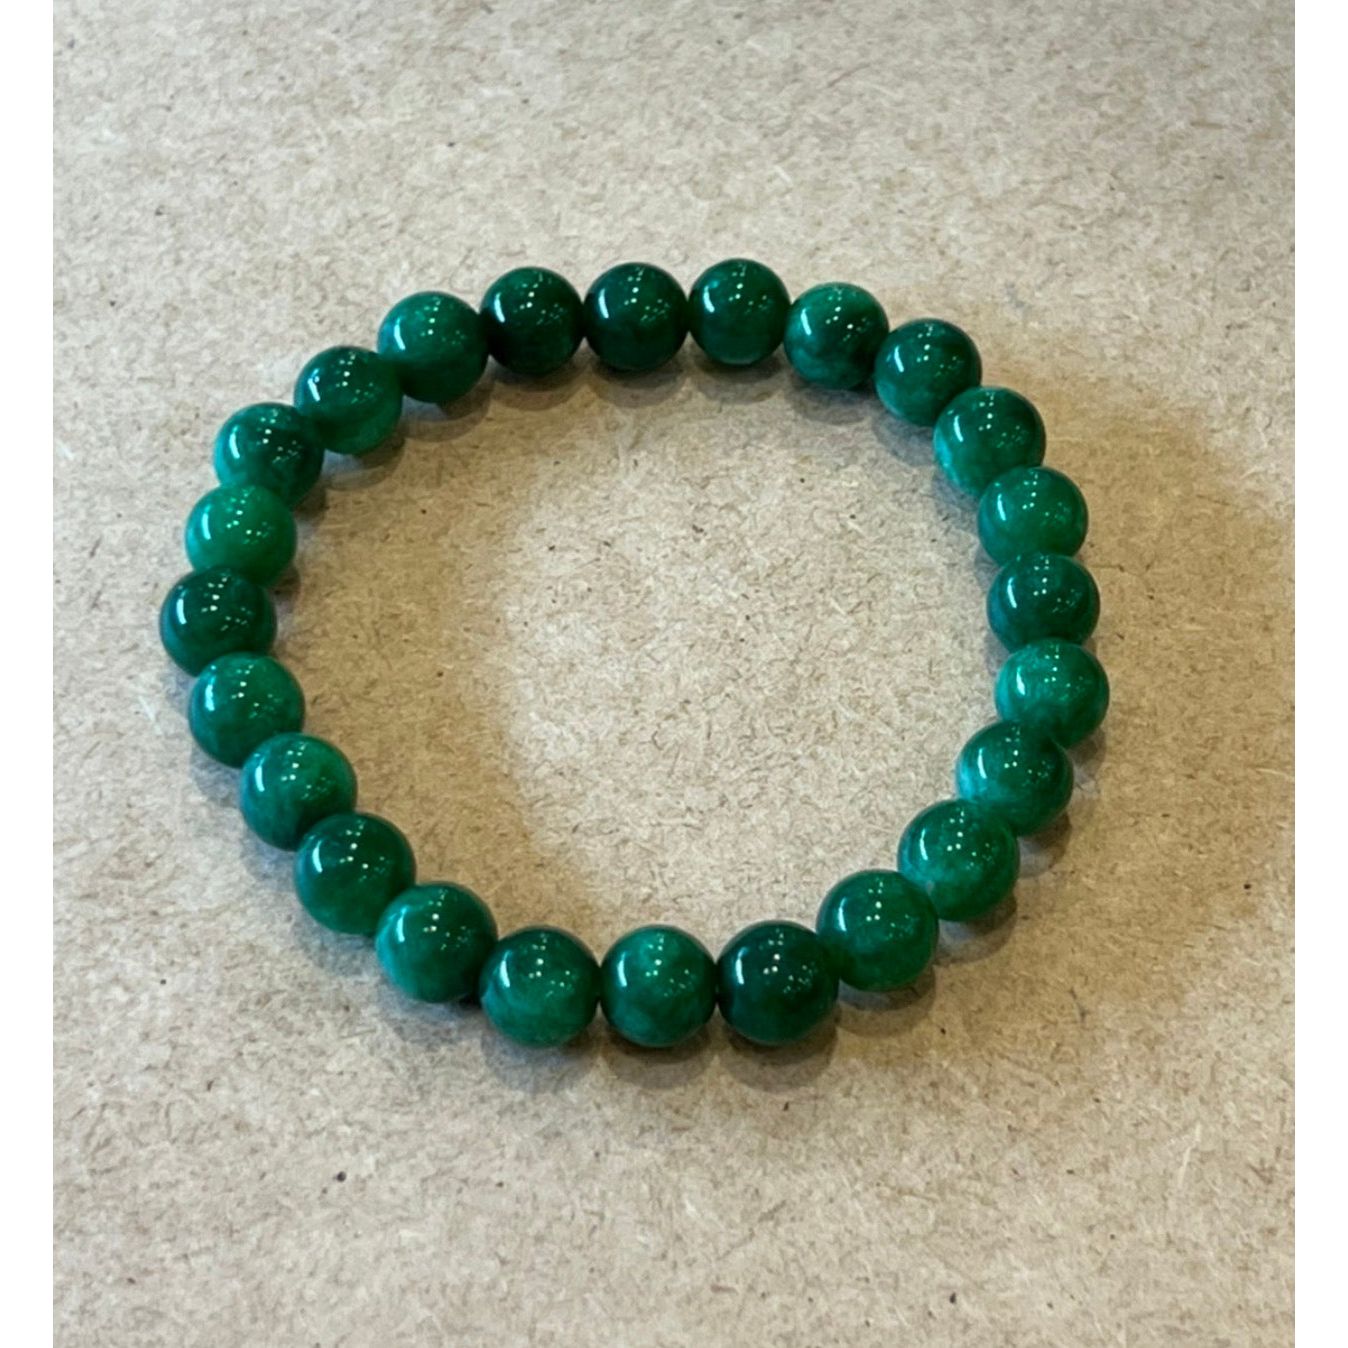 Handmade Green Jade Bracelet, Purity and Serenity.